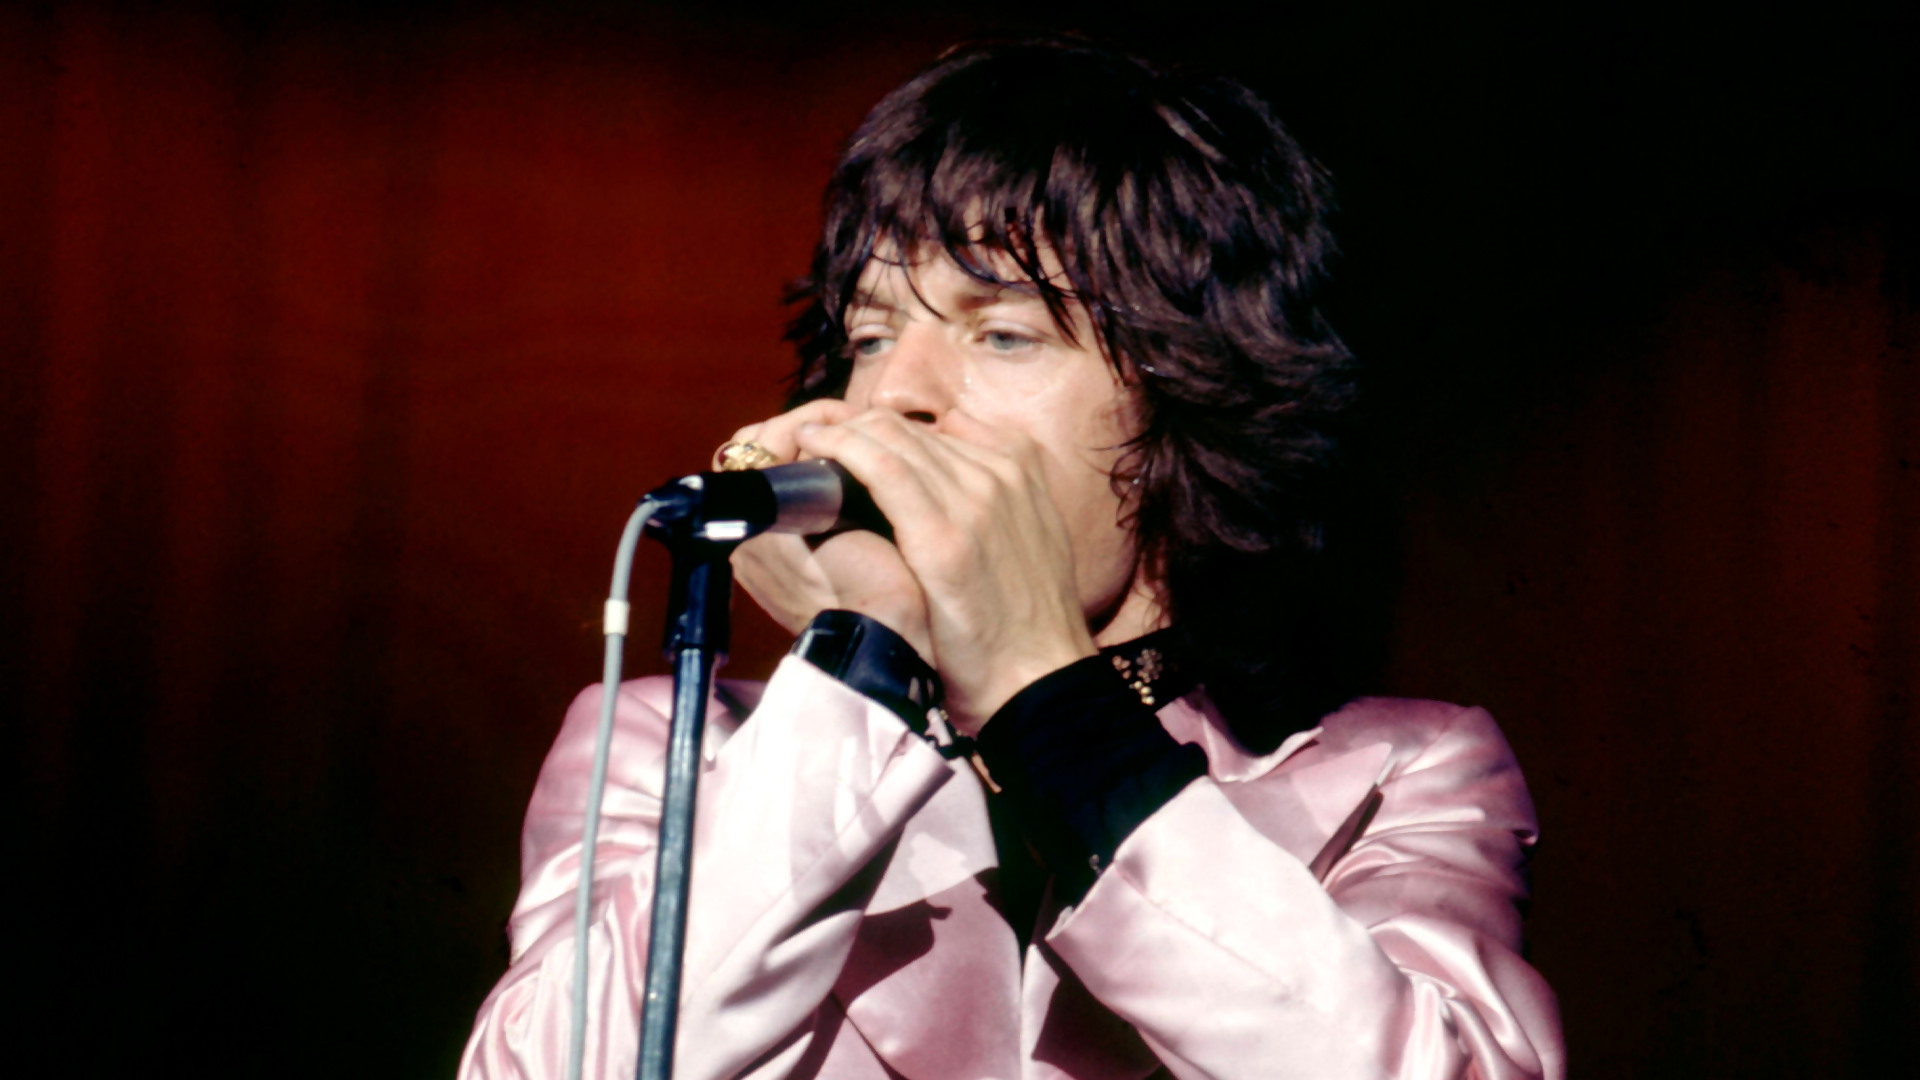 HARMONICA EDITION TWO – Mick Jagger